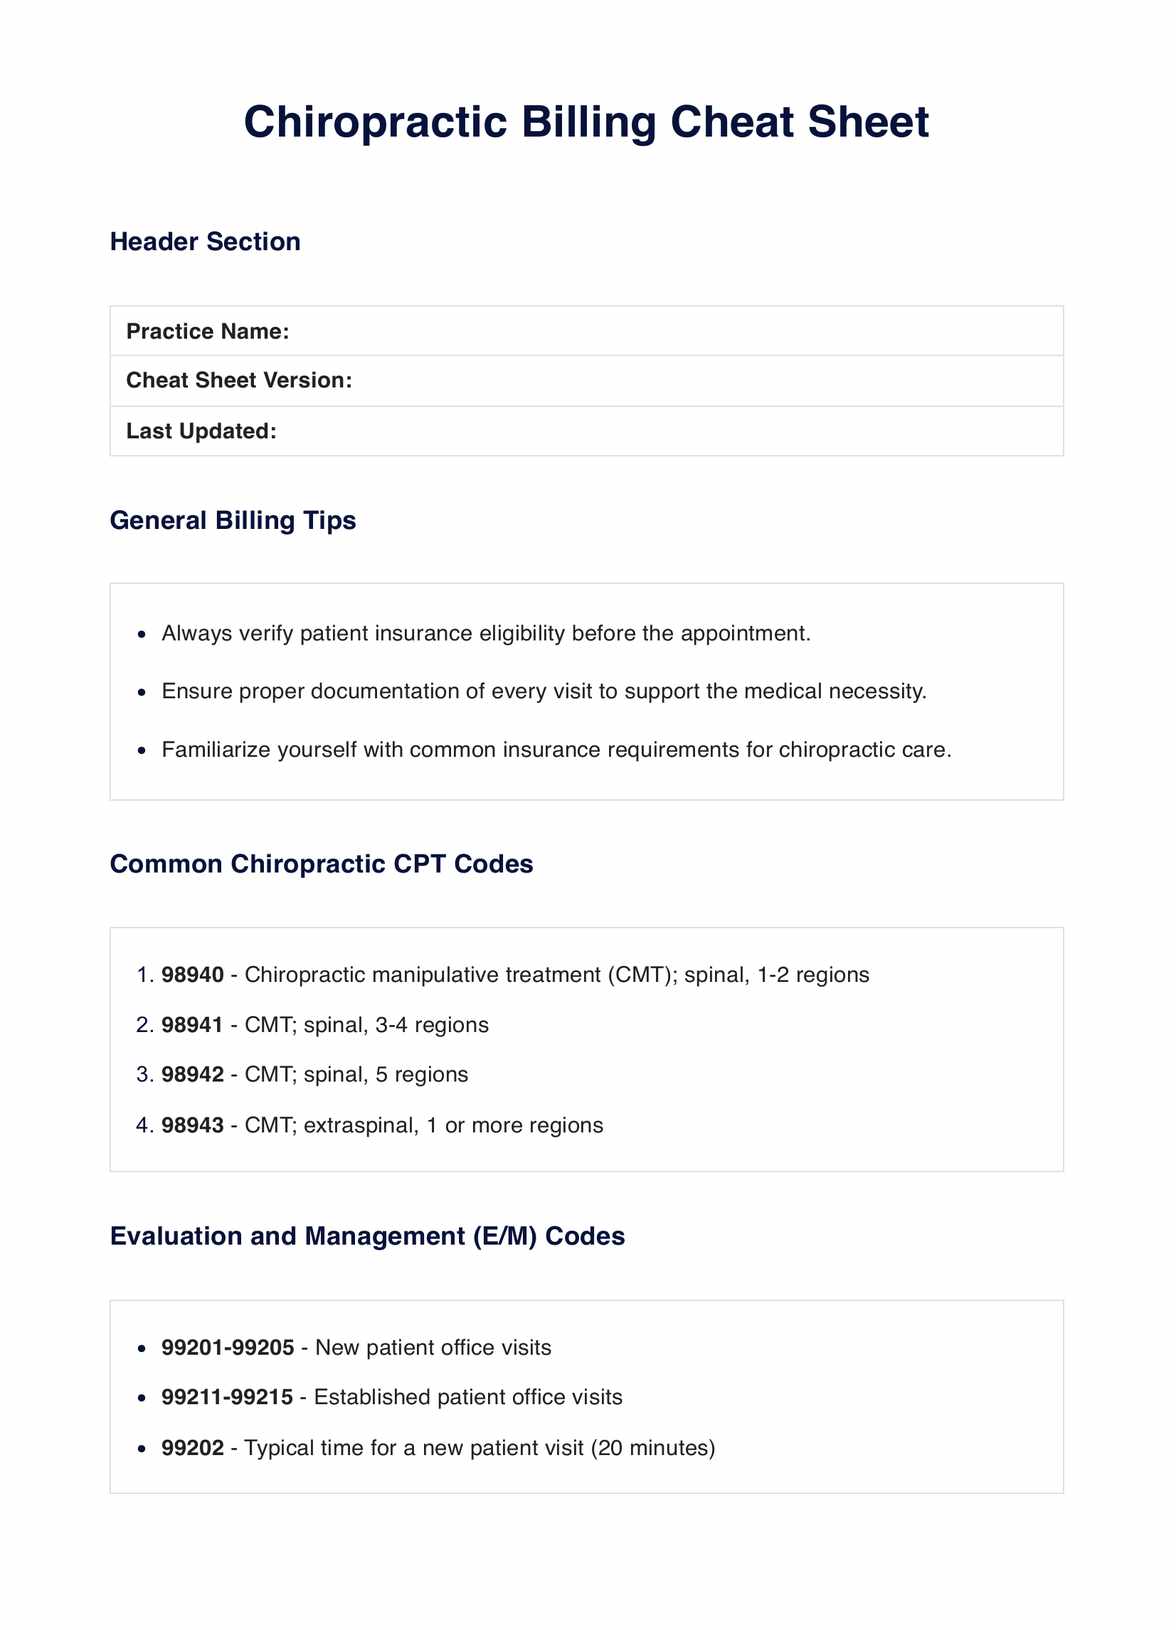 Chiropractic Billing Cheat Sheet PDF Example